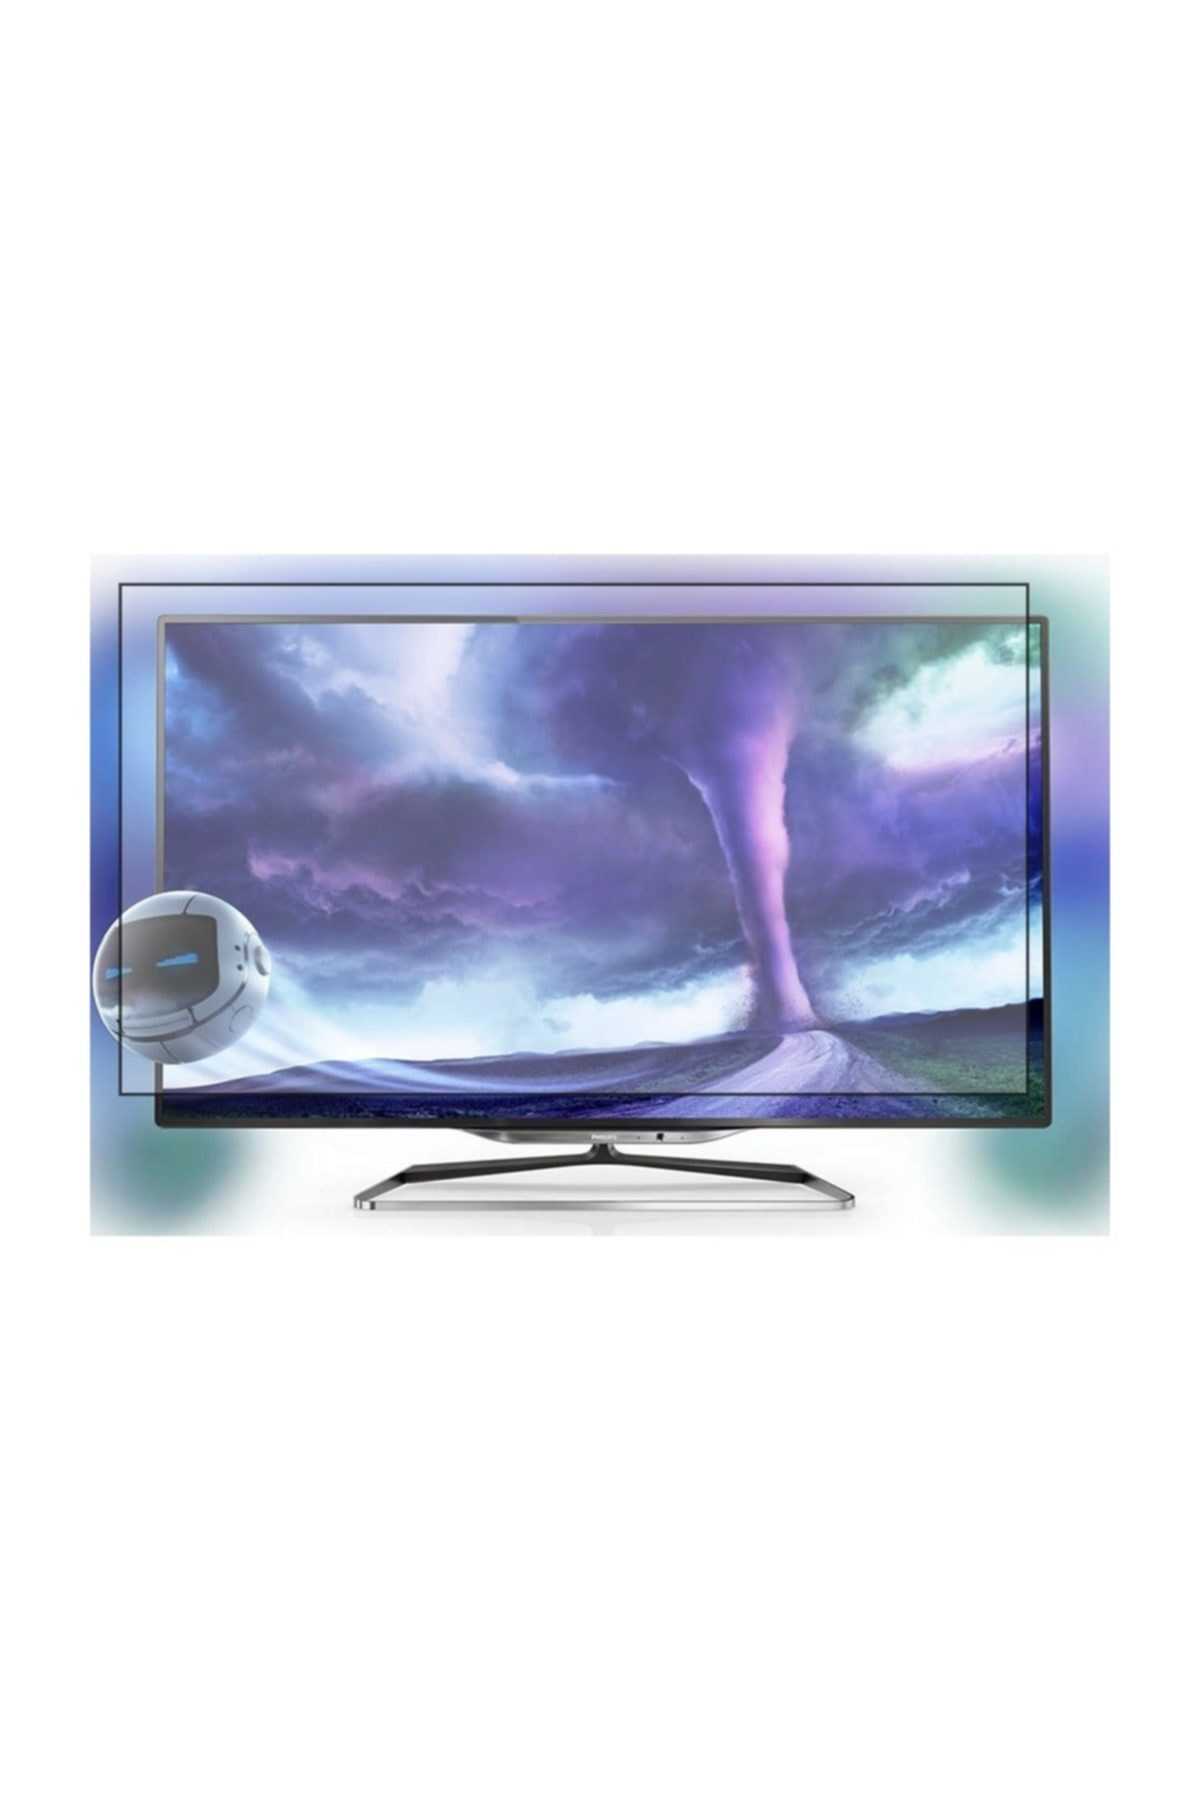 Телевизор led philips 40" 40pfl8008s/60 темный металлик full hd 3d 1400hz pmr wifi dvb-t2/c/s2 smart - купить , скидки, цена, отзывы, обзор, характеристики - телевизоры